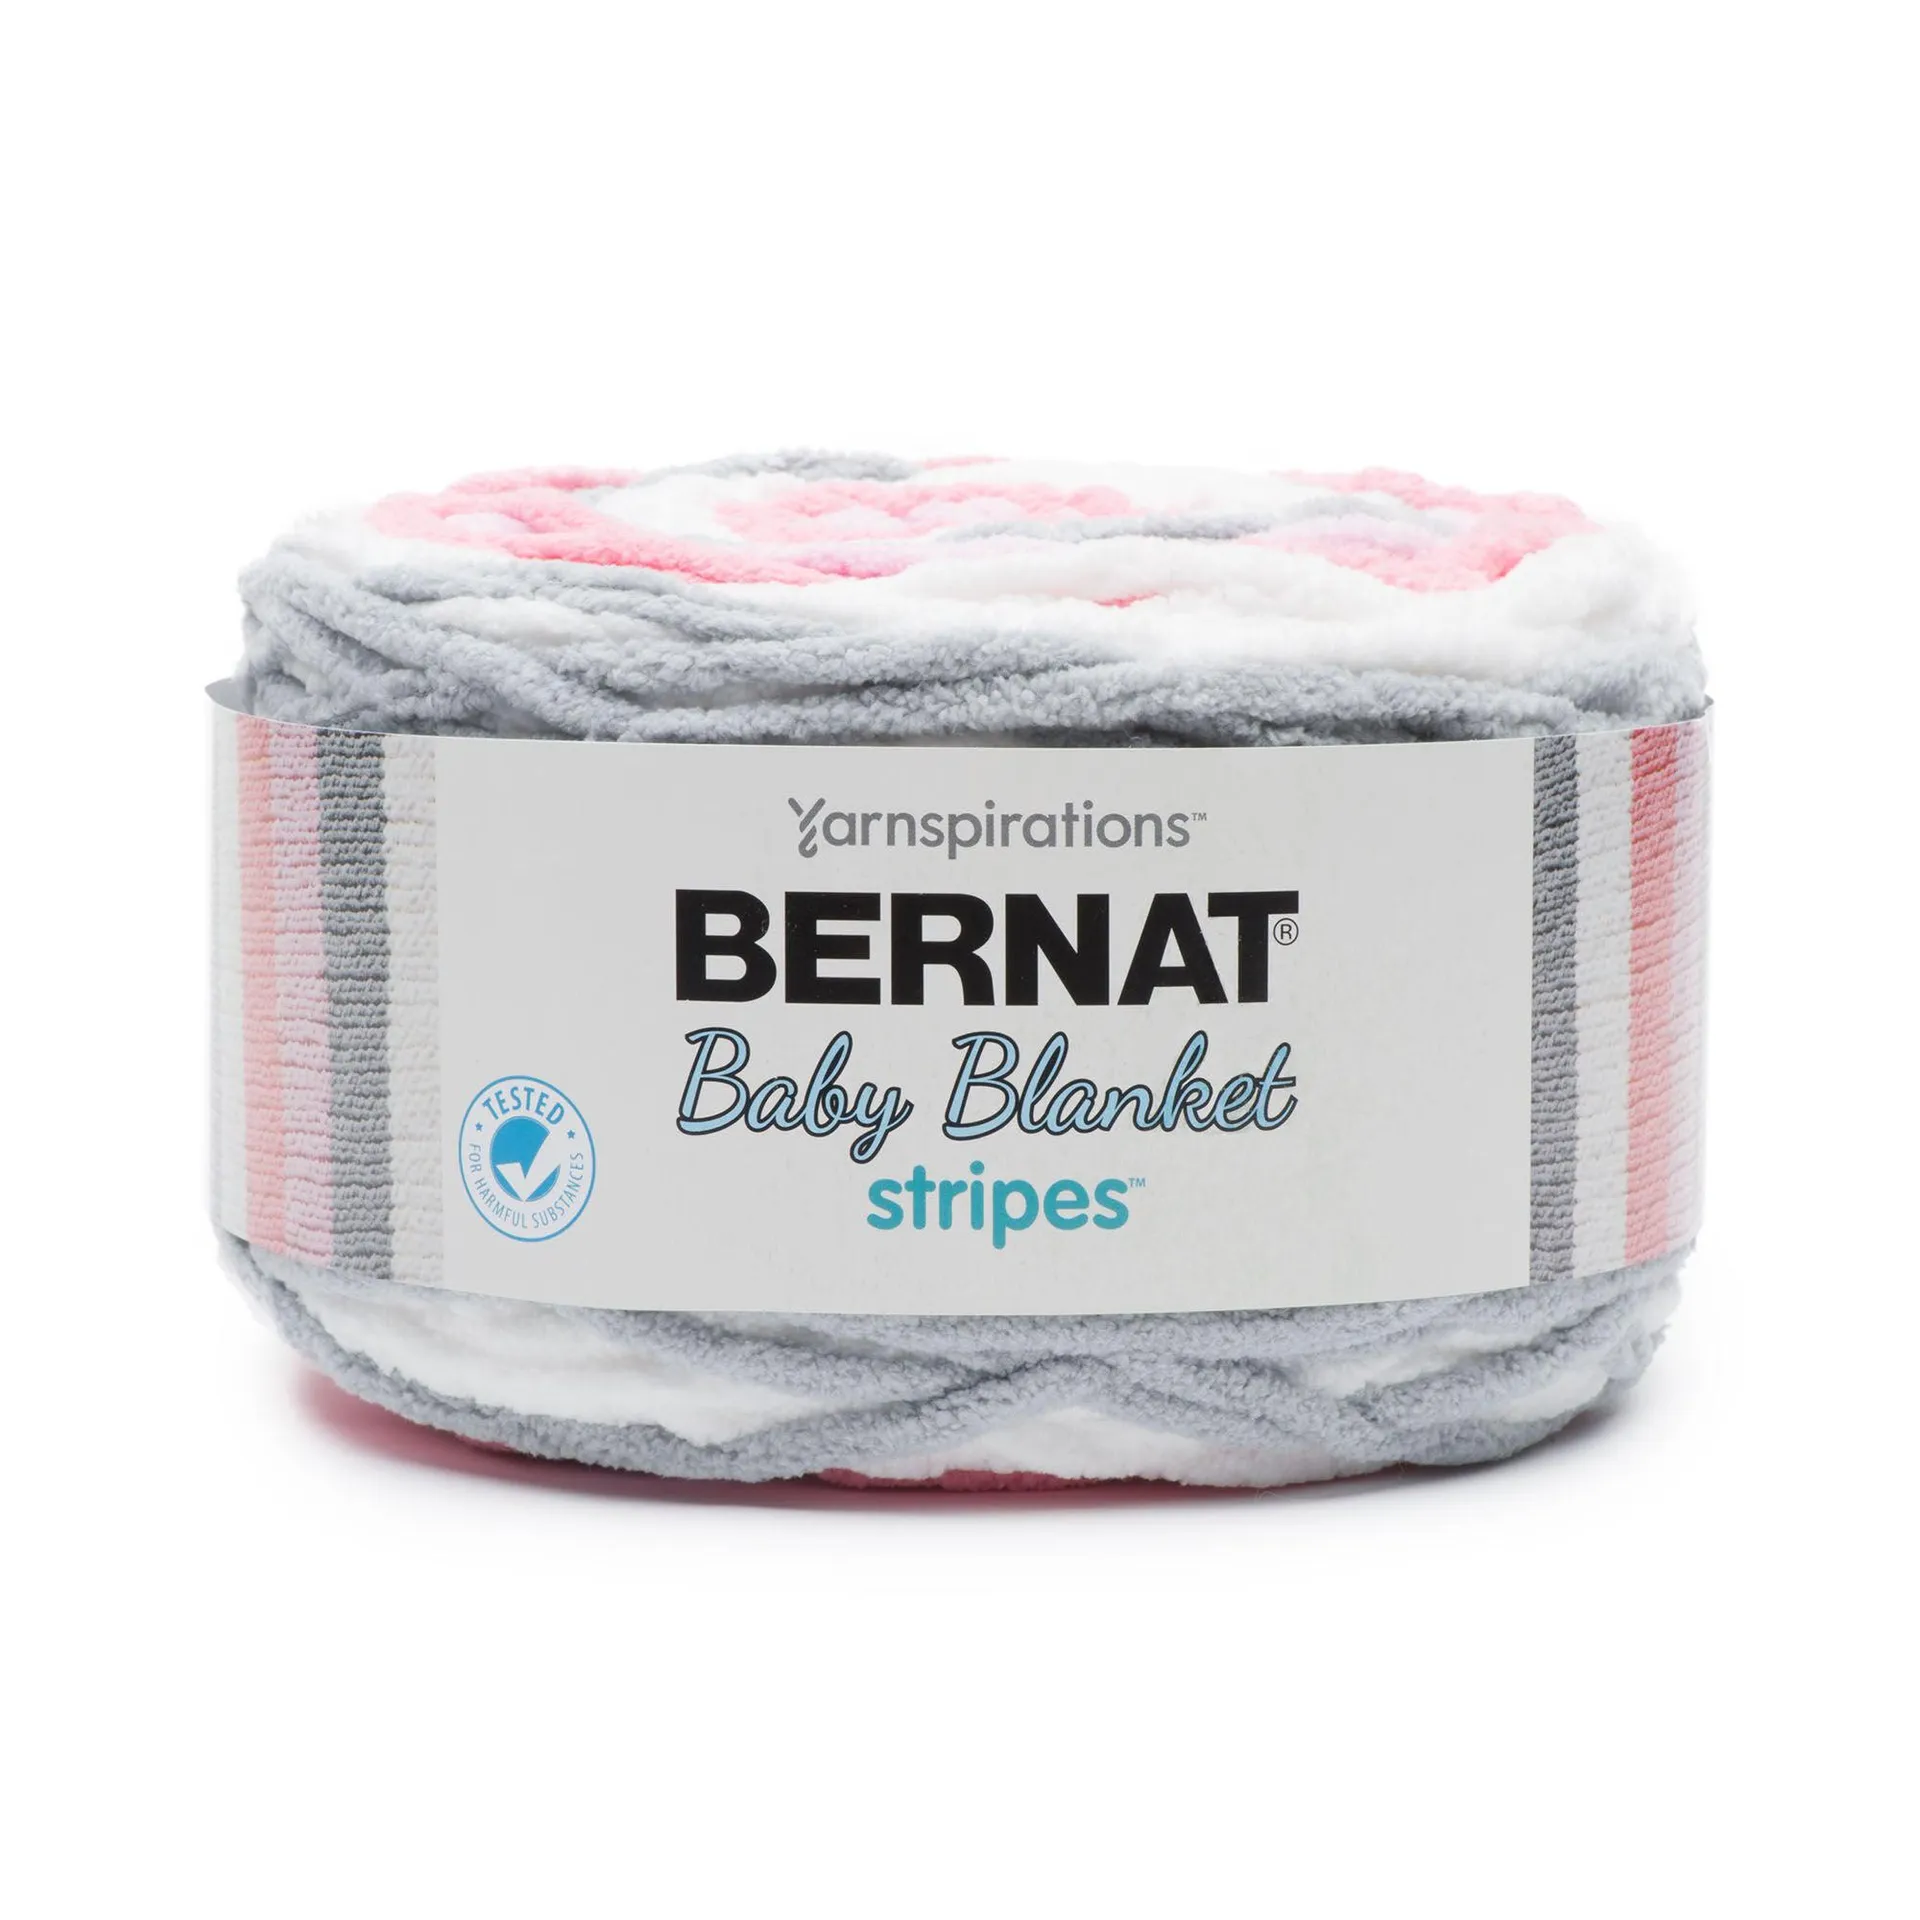 Baby Blanket Stripes - 300g - Bernat